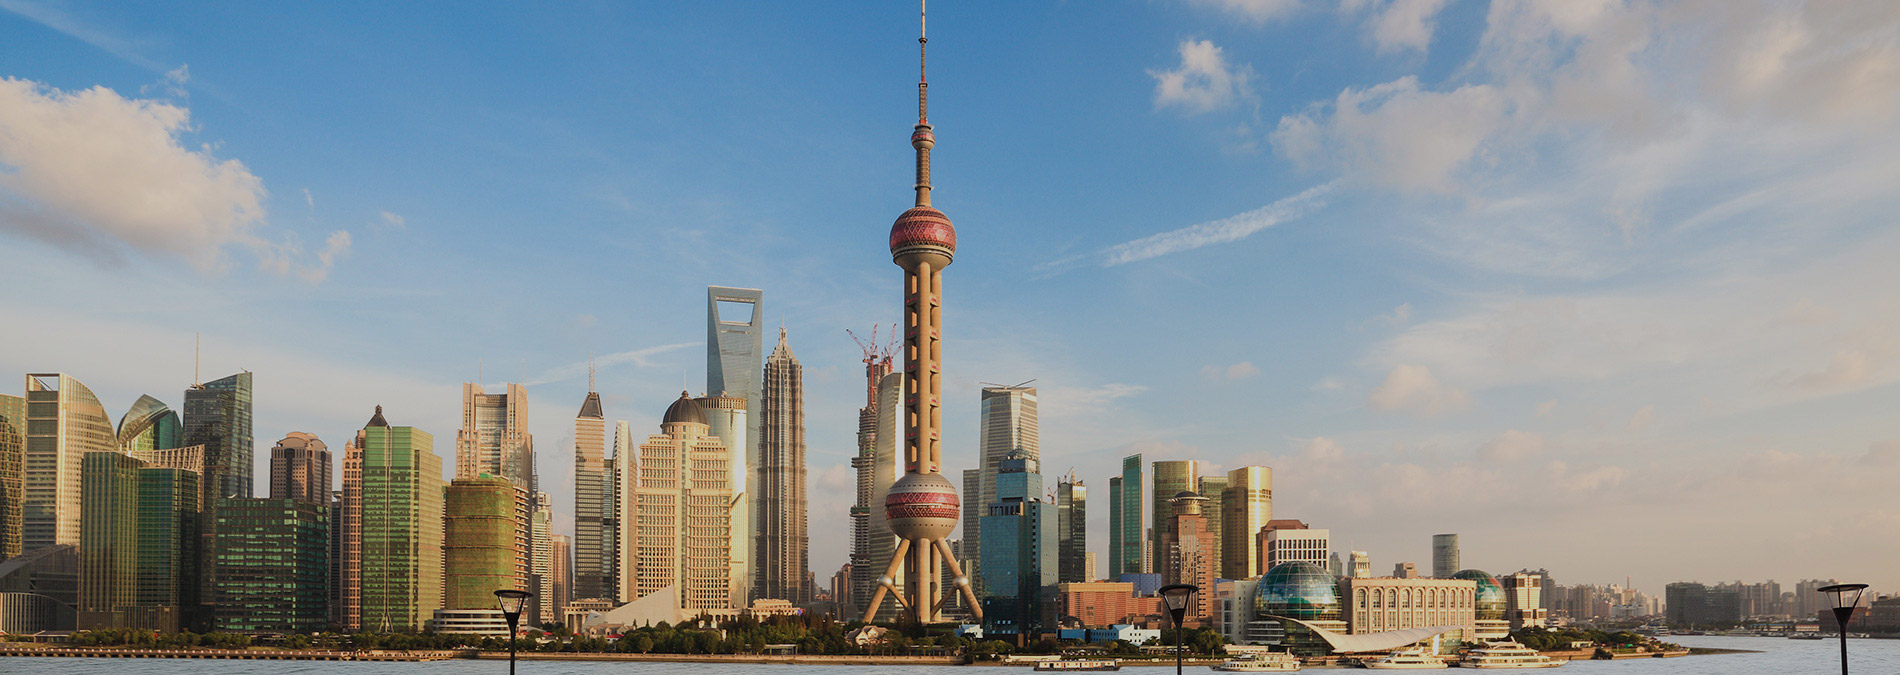 oriental-pearl-shanghai-skyline